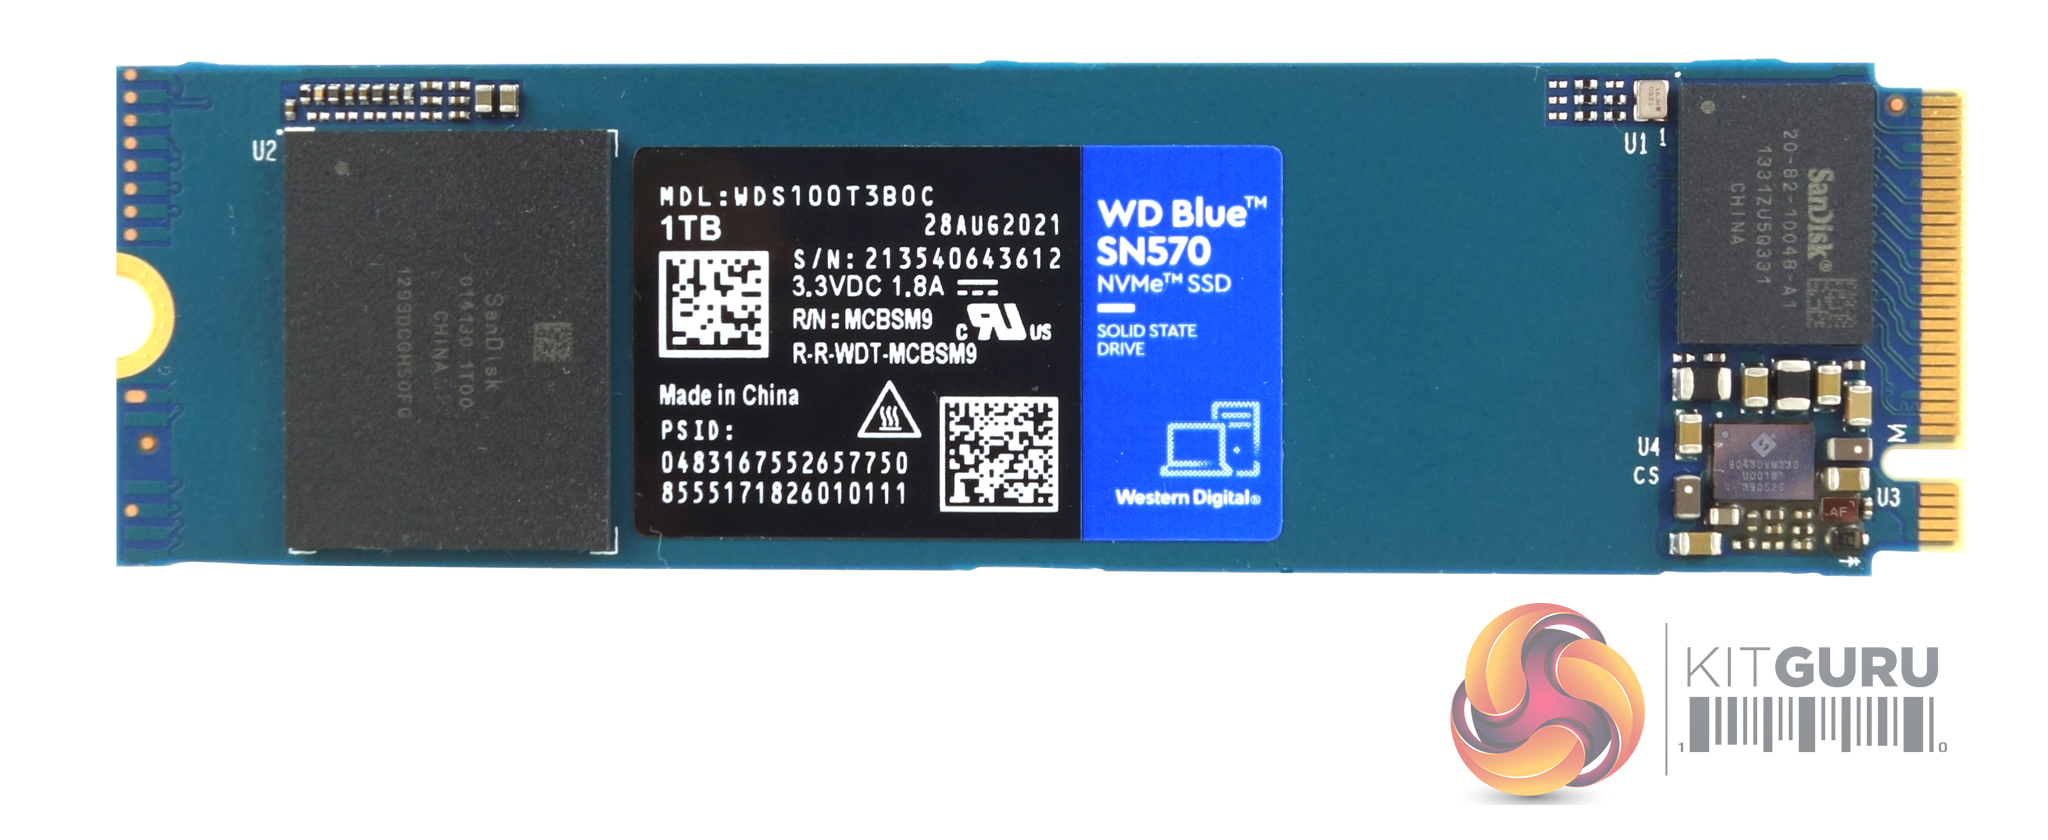 WD Blue SN570 1TB SSD Review